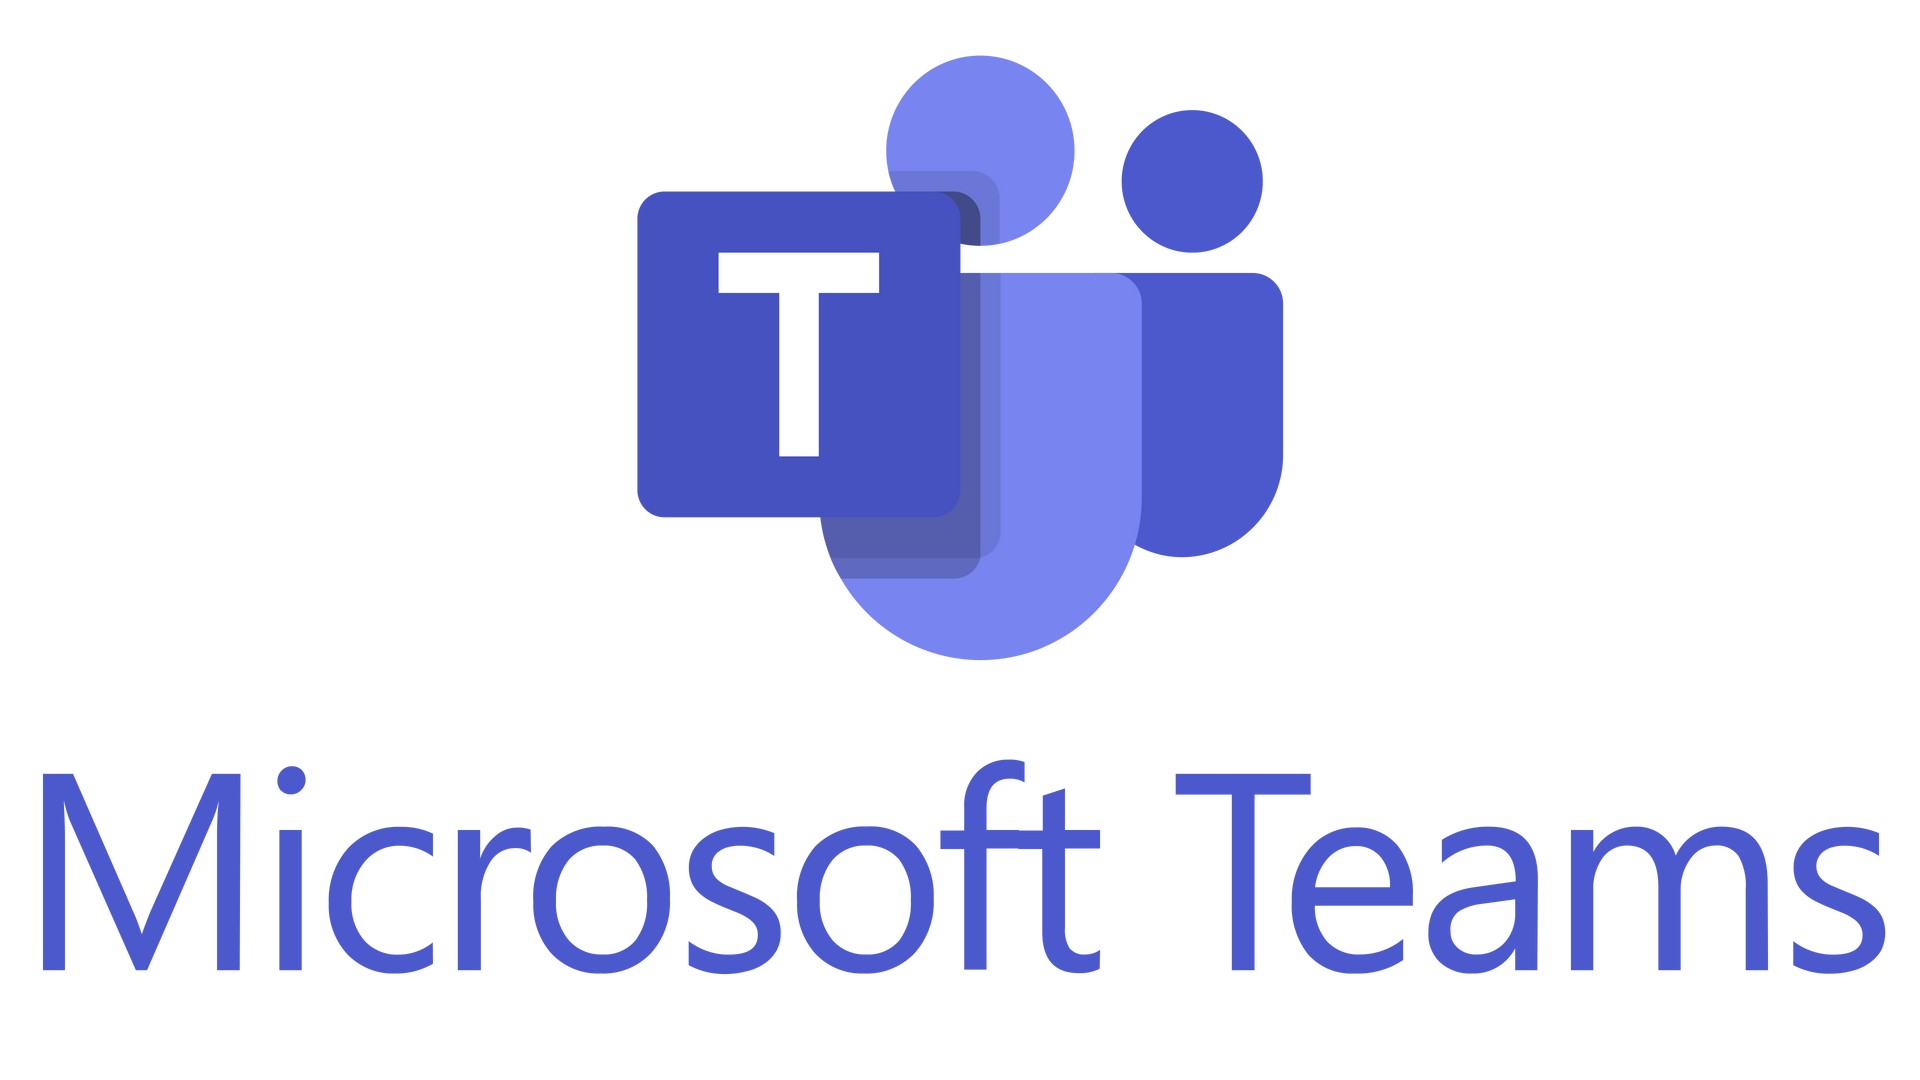 Microsoft teams logo on a white background